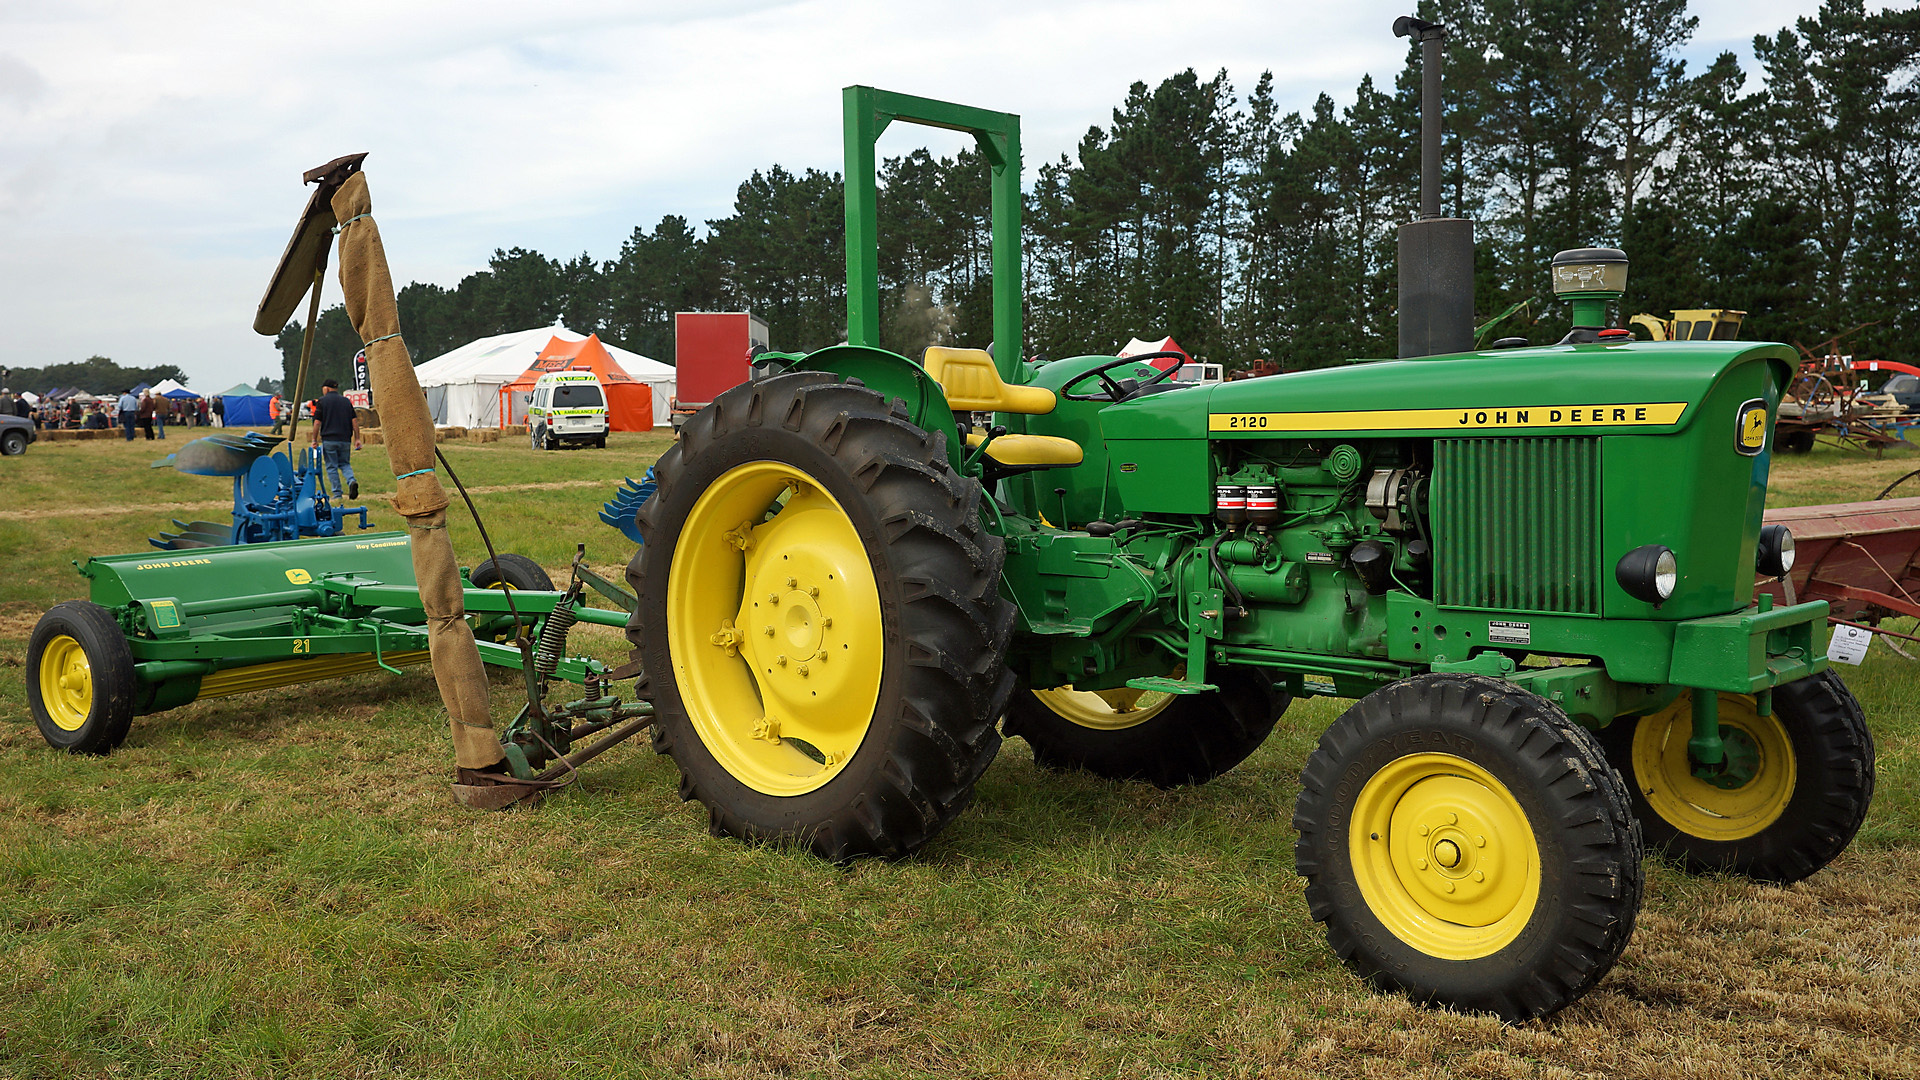 John Deere 2120 Tractor. | | Flickr - Photo Sharing!